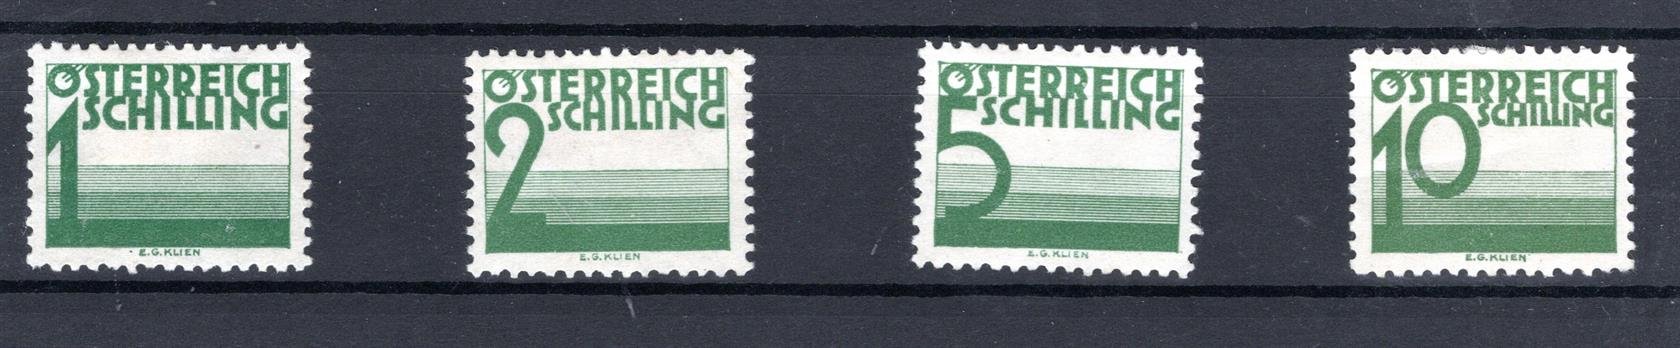 Rakousko - Mi. P 155 - 8, koncové Shilingové hodnoty, kat. cca 250,- Eu